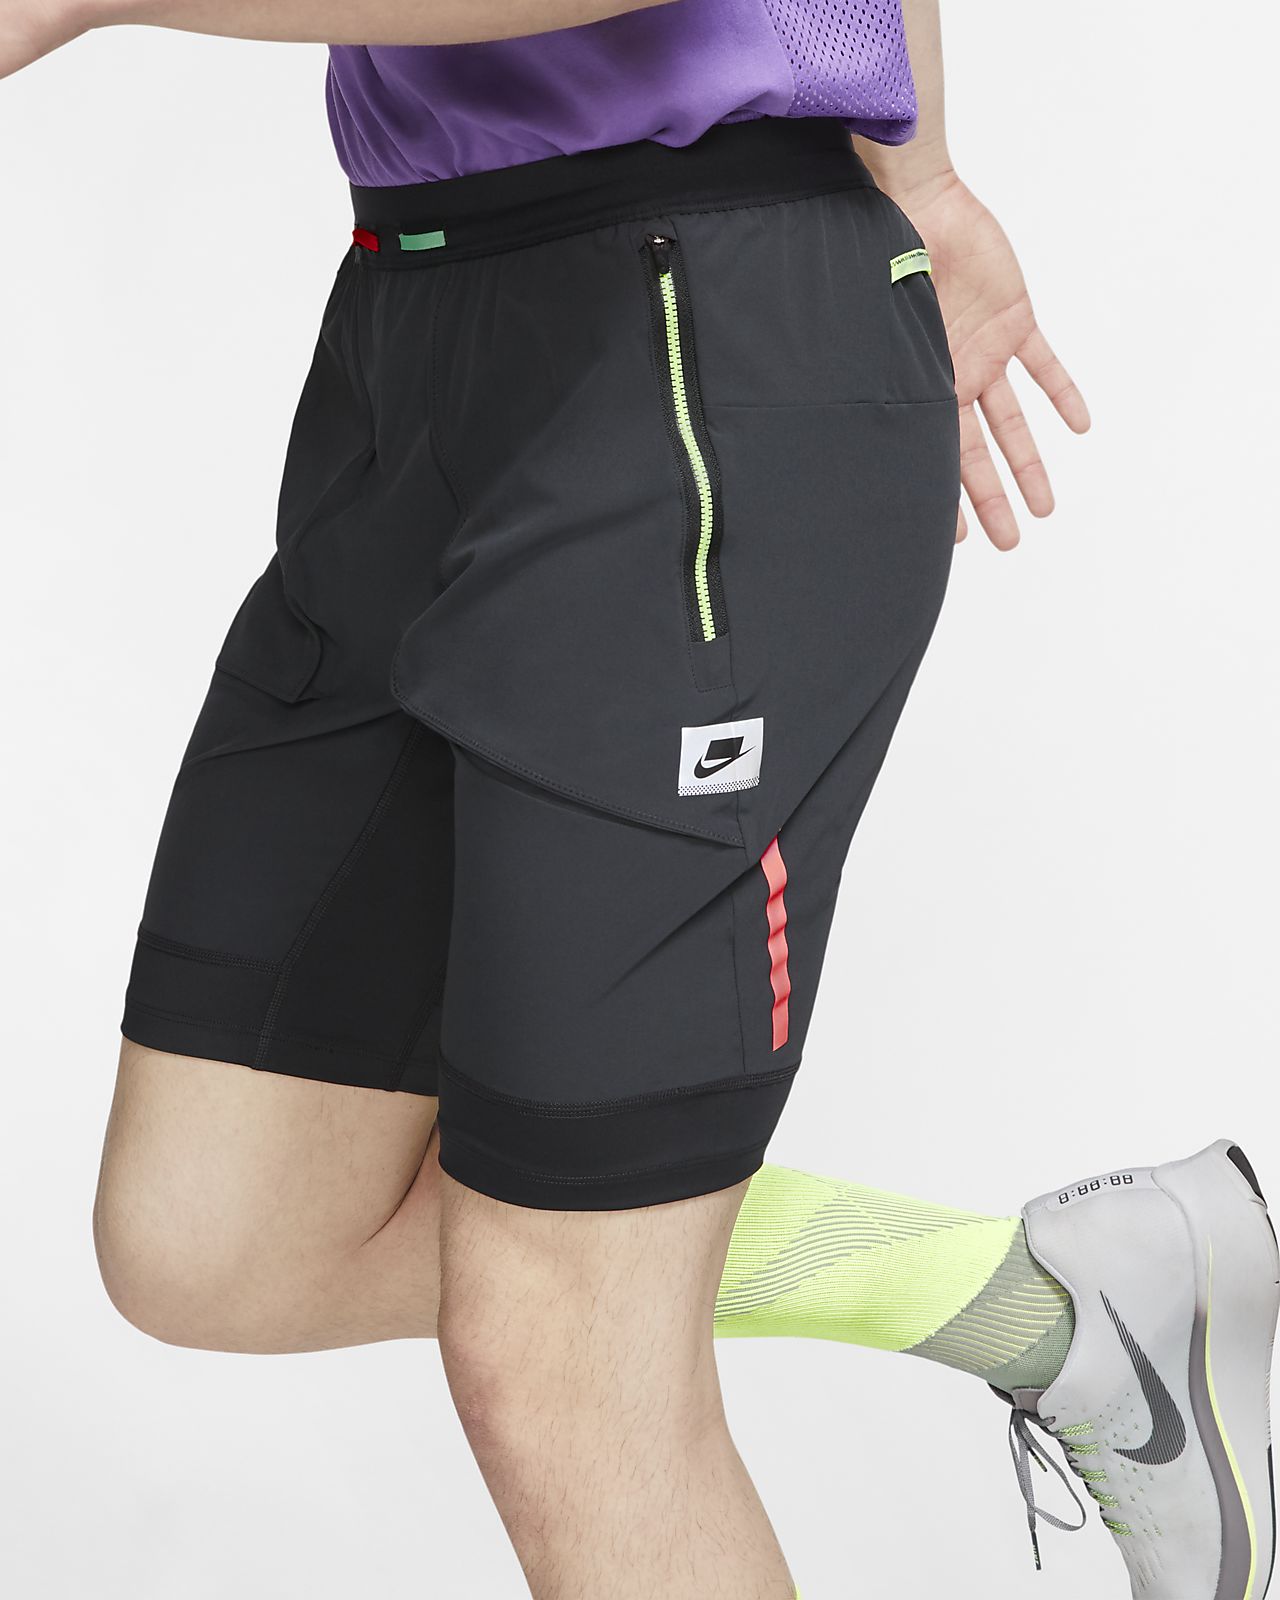 Nike Cycling Shorts Size Chart